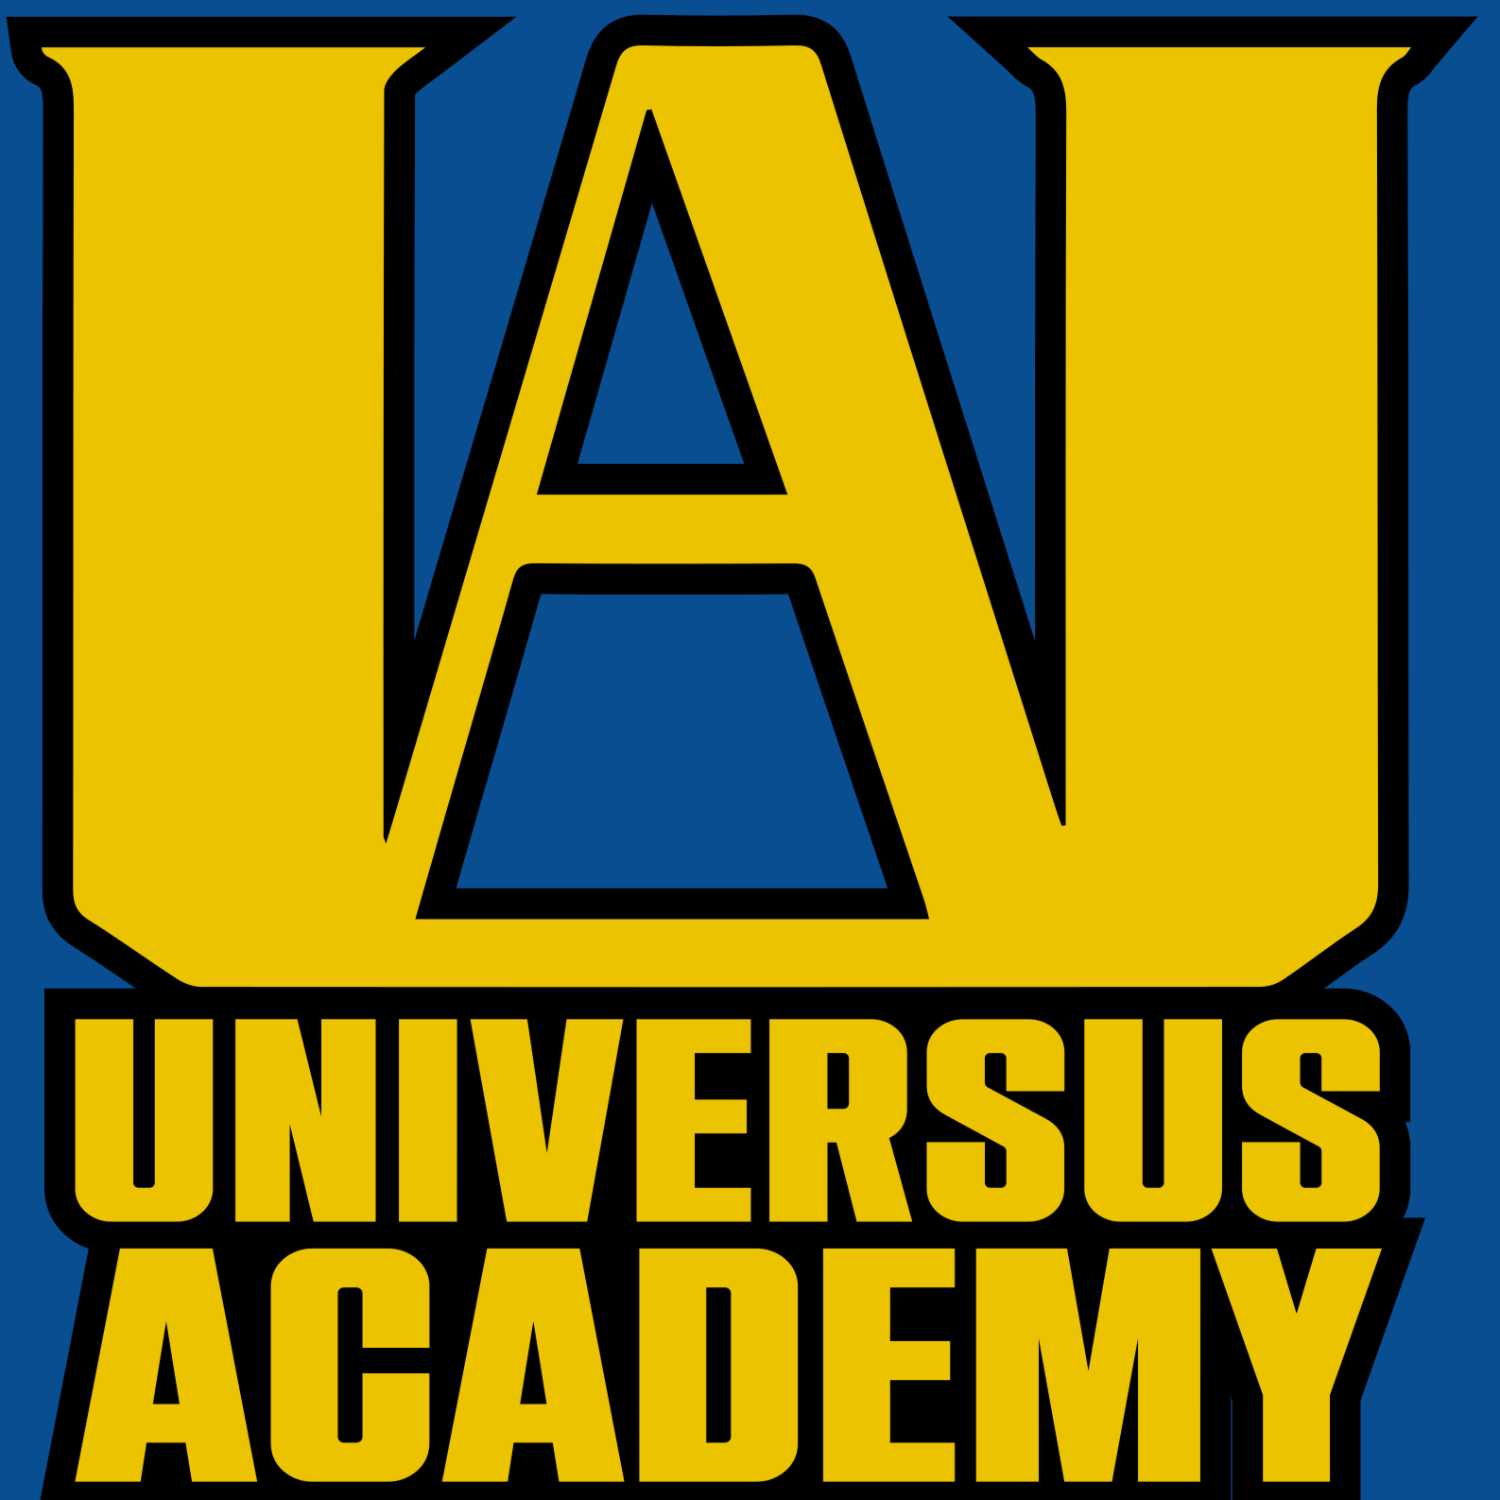 hero academy logo